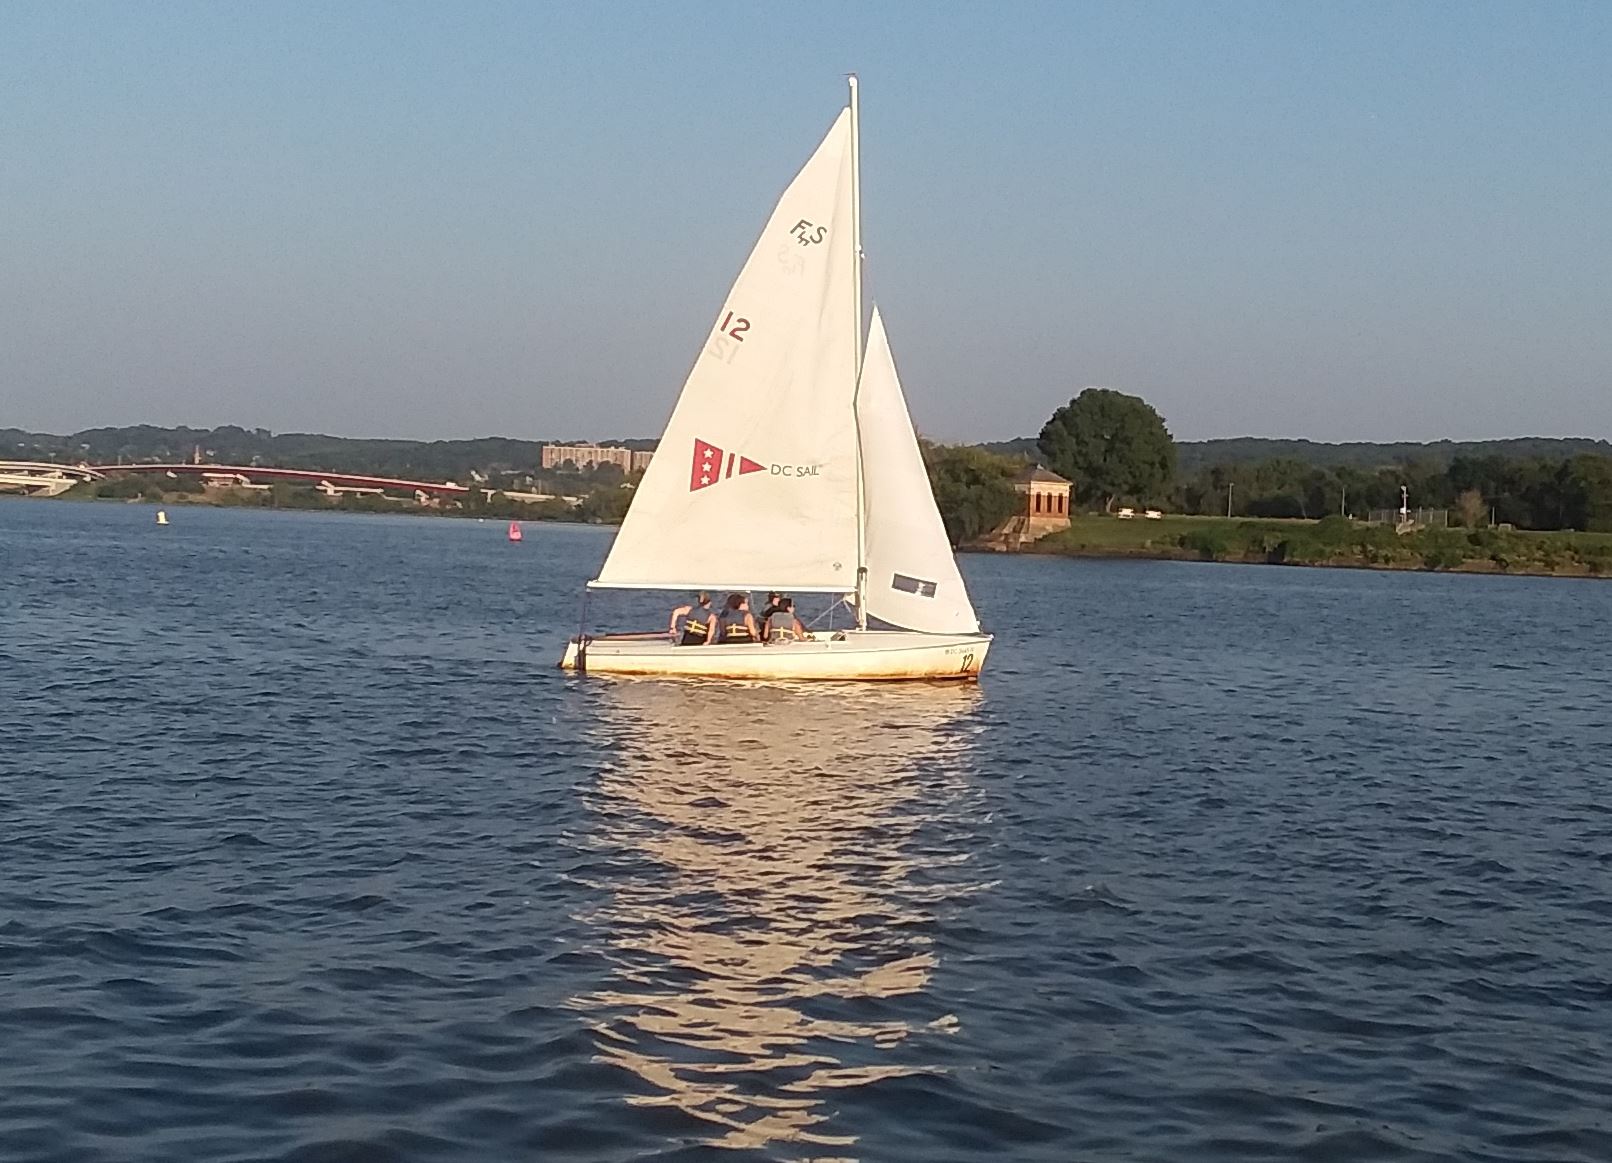 adult sailing lessons